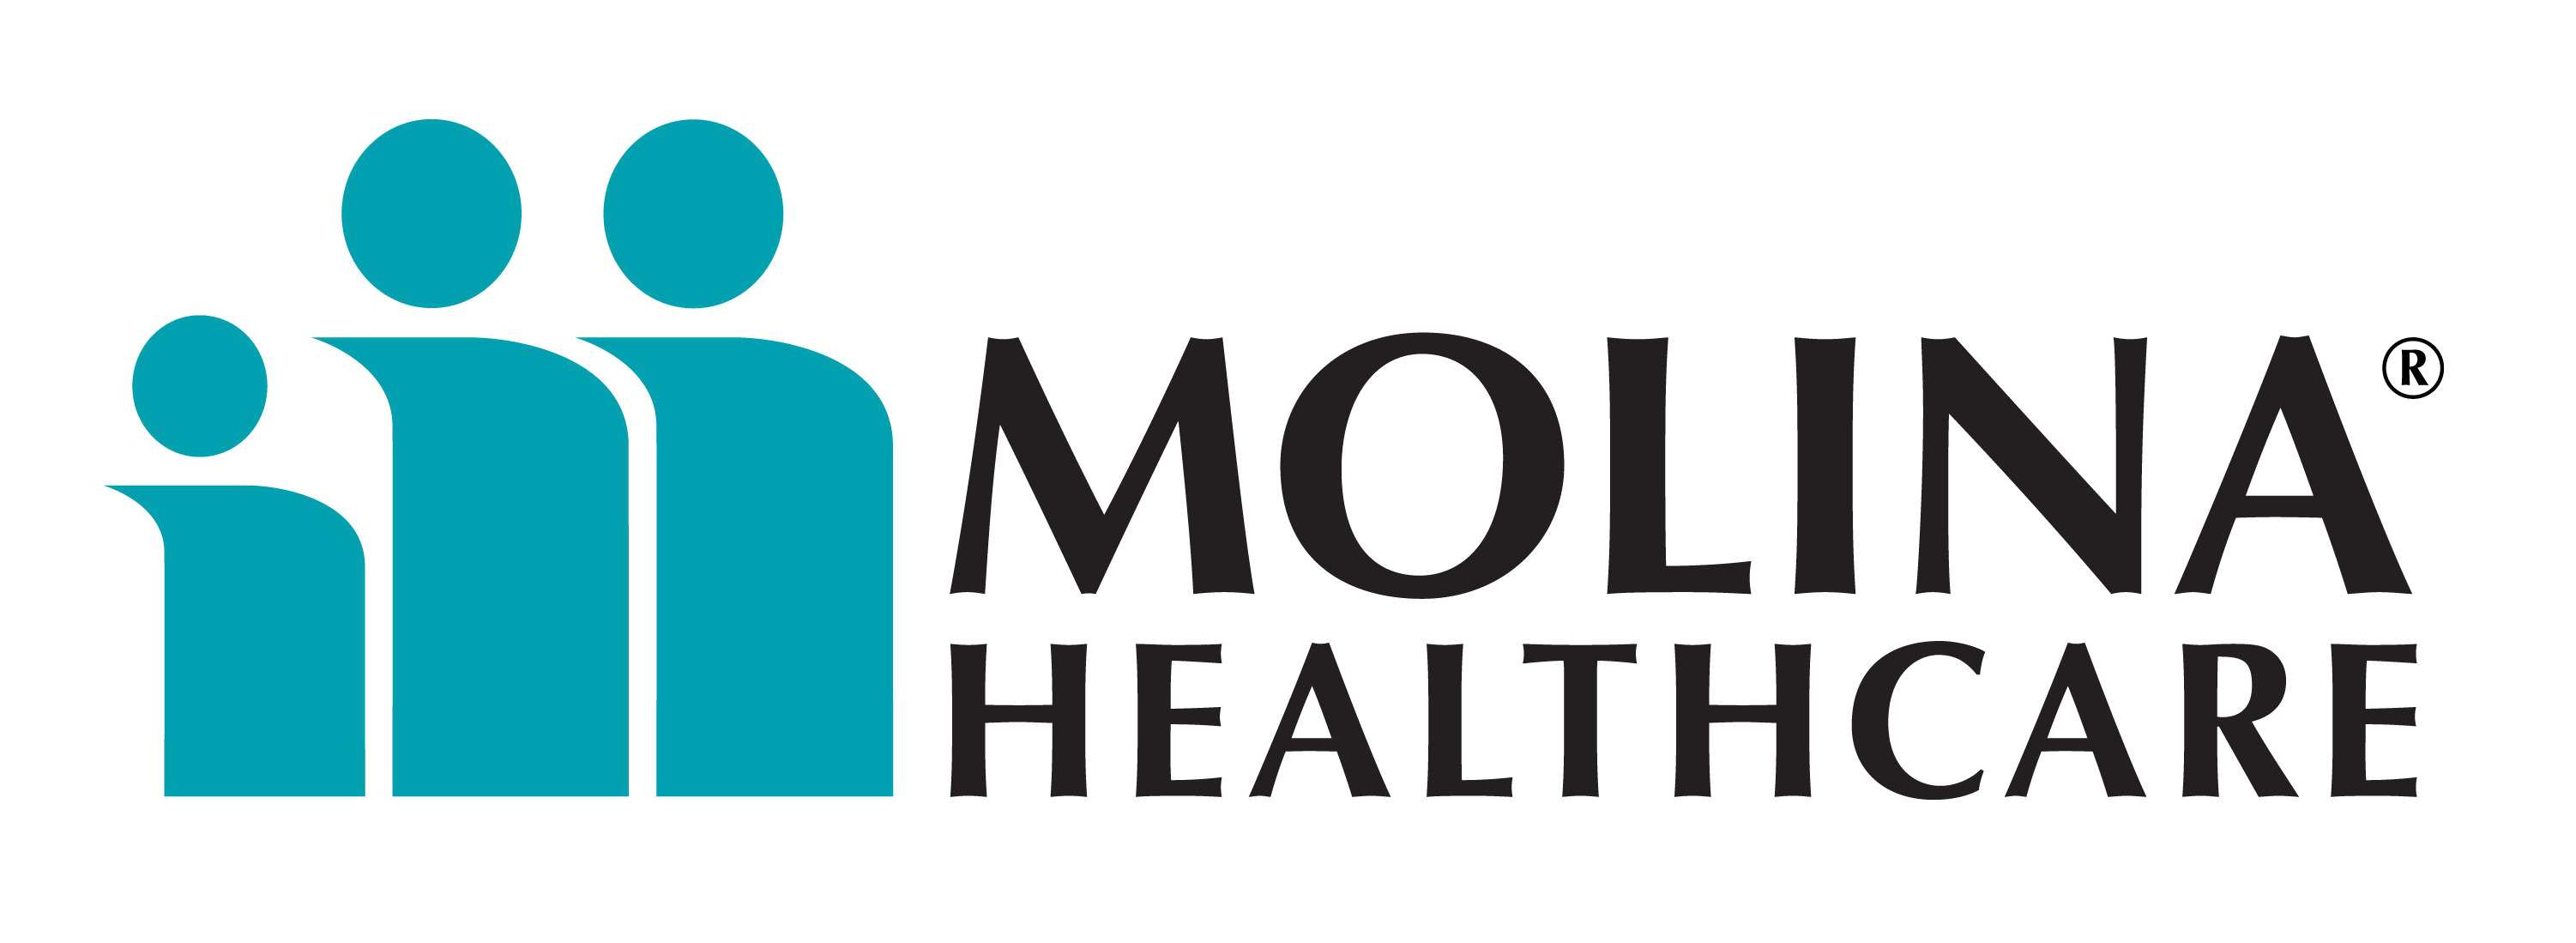 Molina Healthcare Logo PNG Image